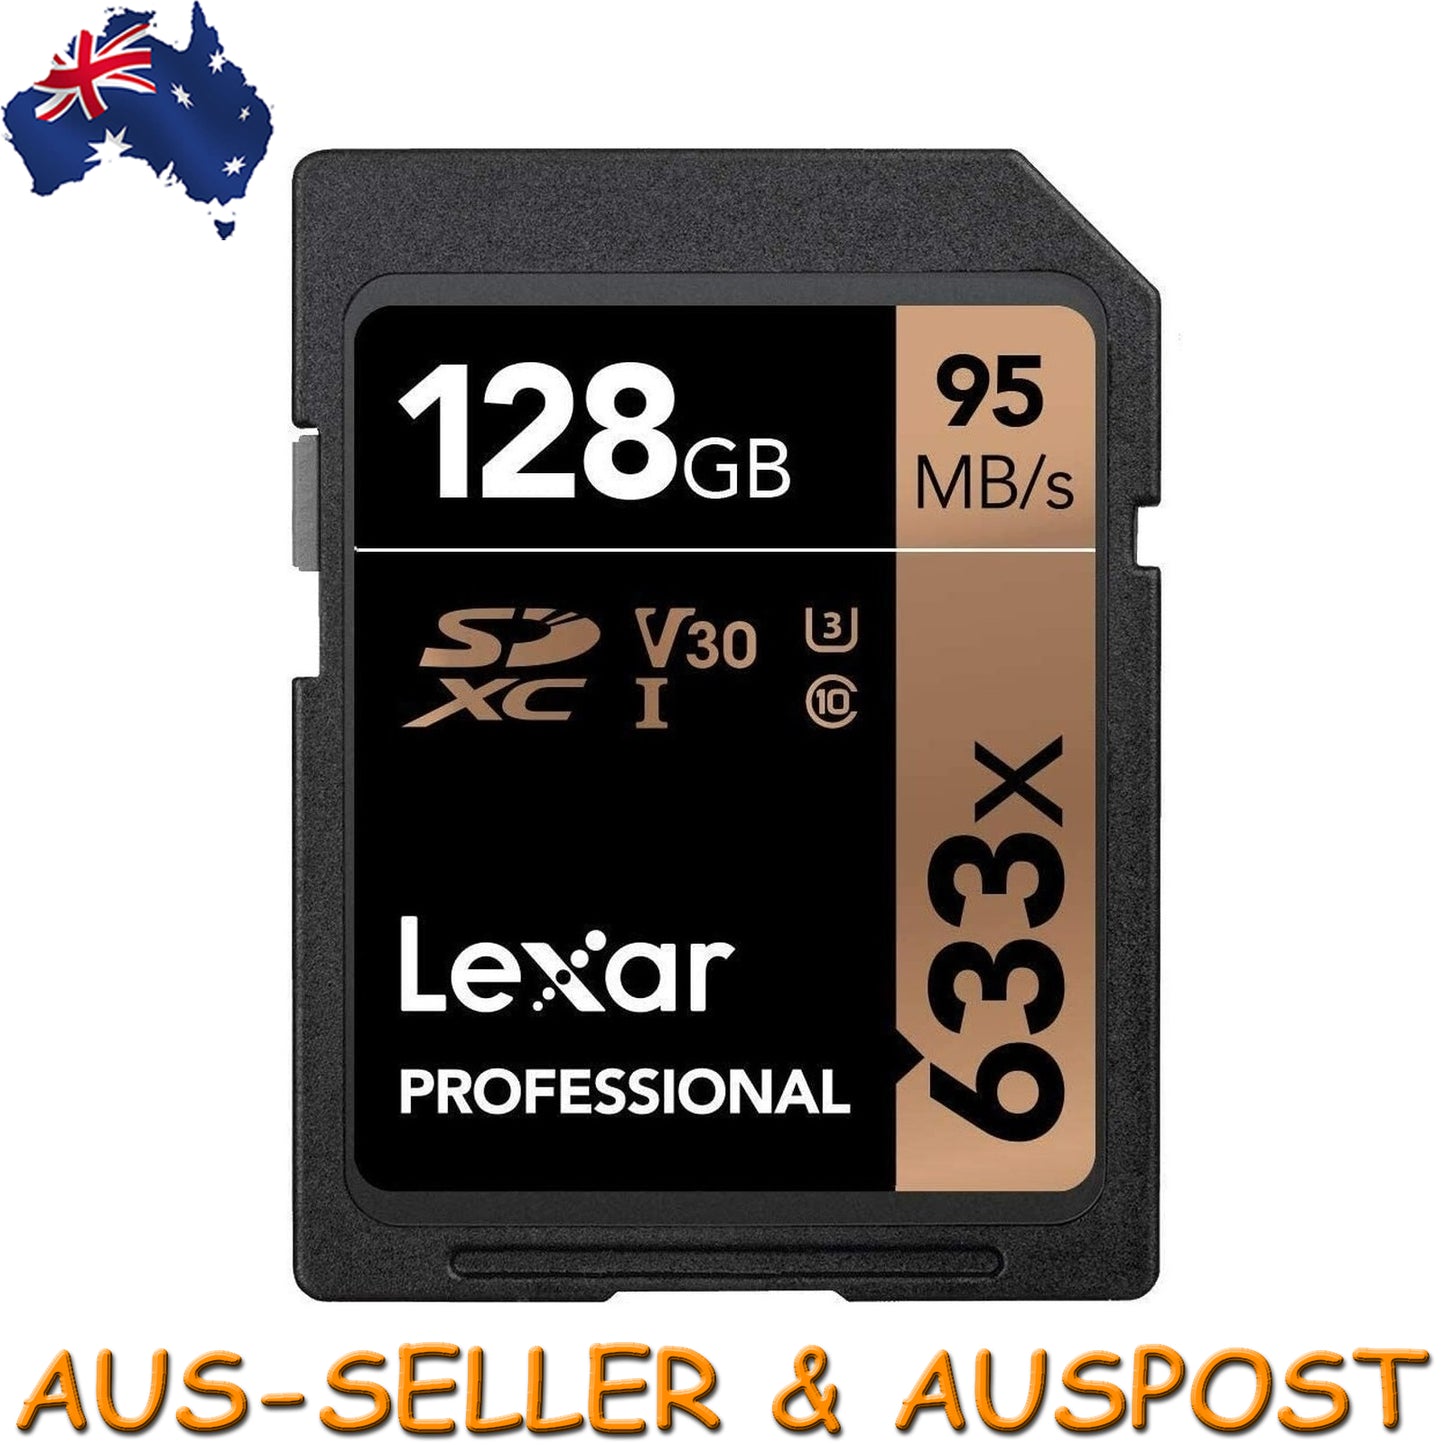 Lexar Professional 128GB SDXC 95MB/s SD Camera Memory TF Card 4K Video DSLR